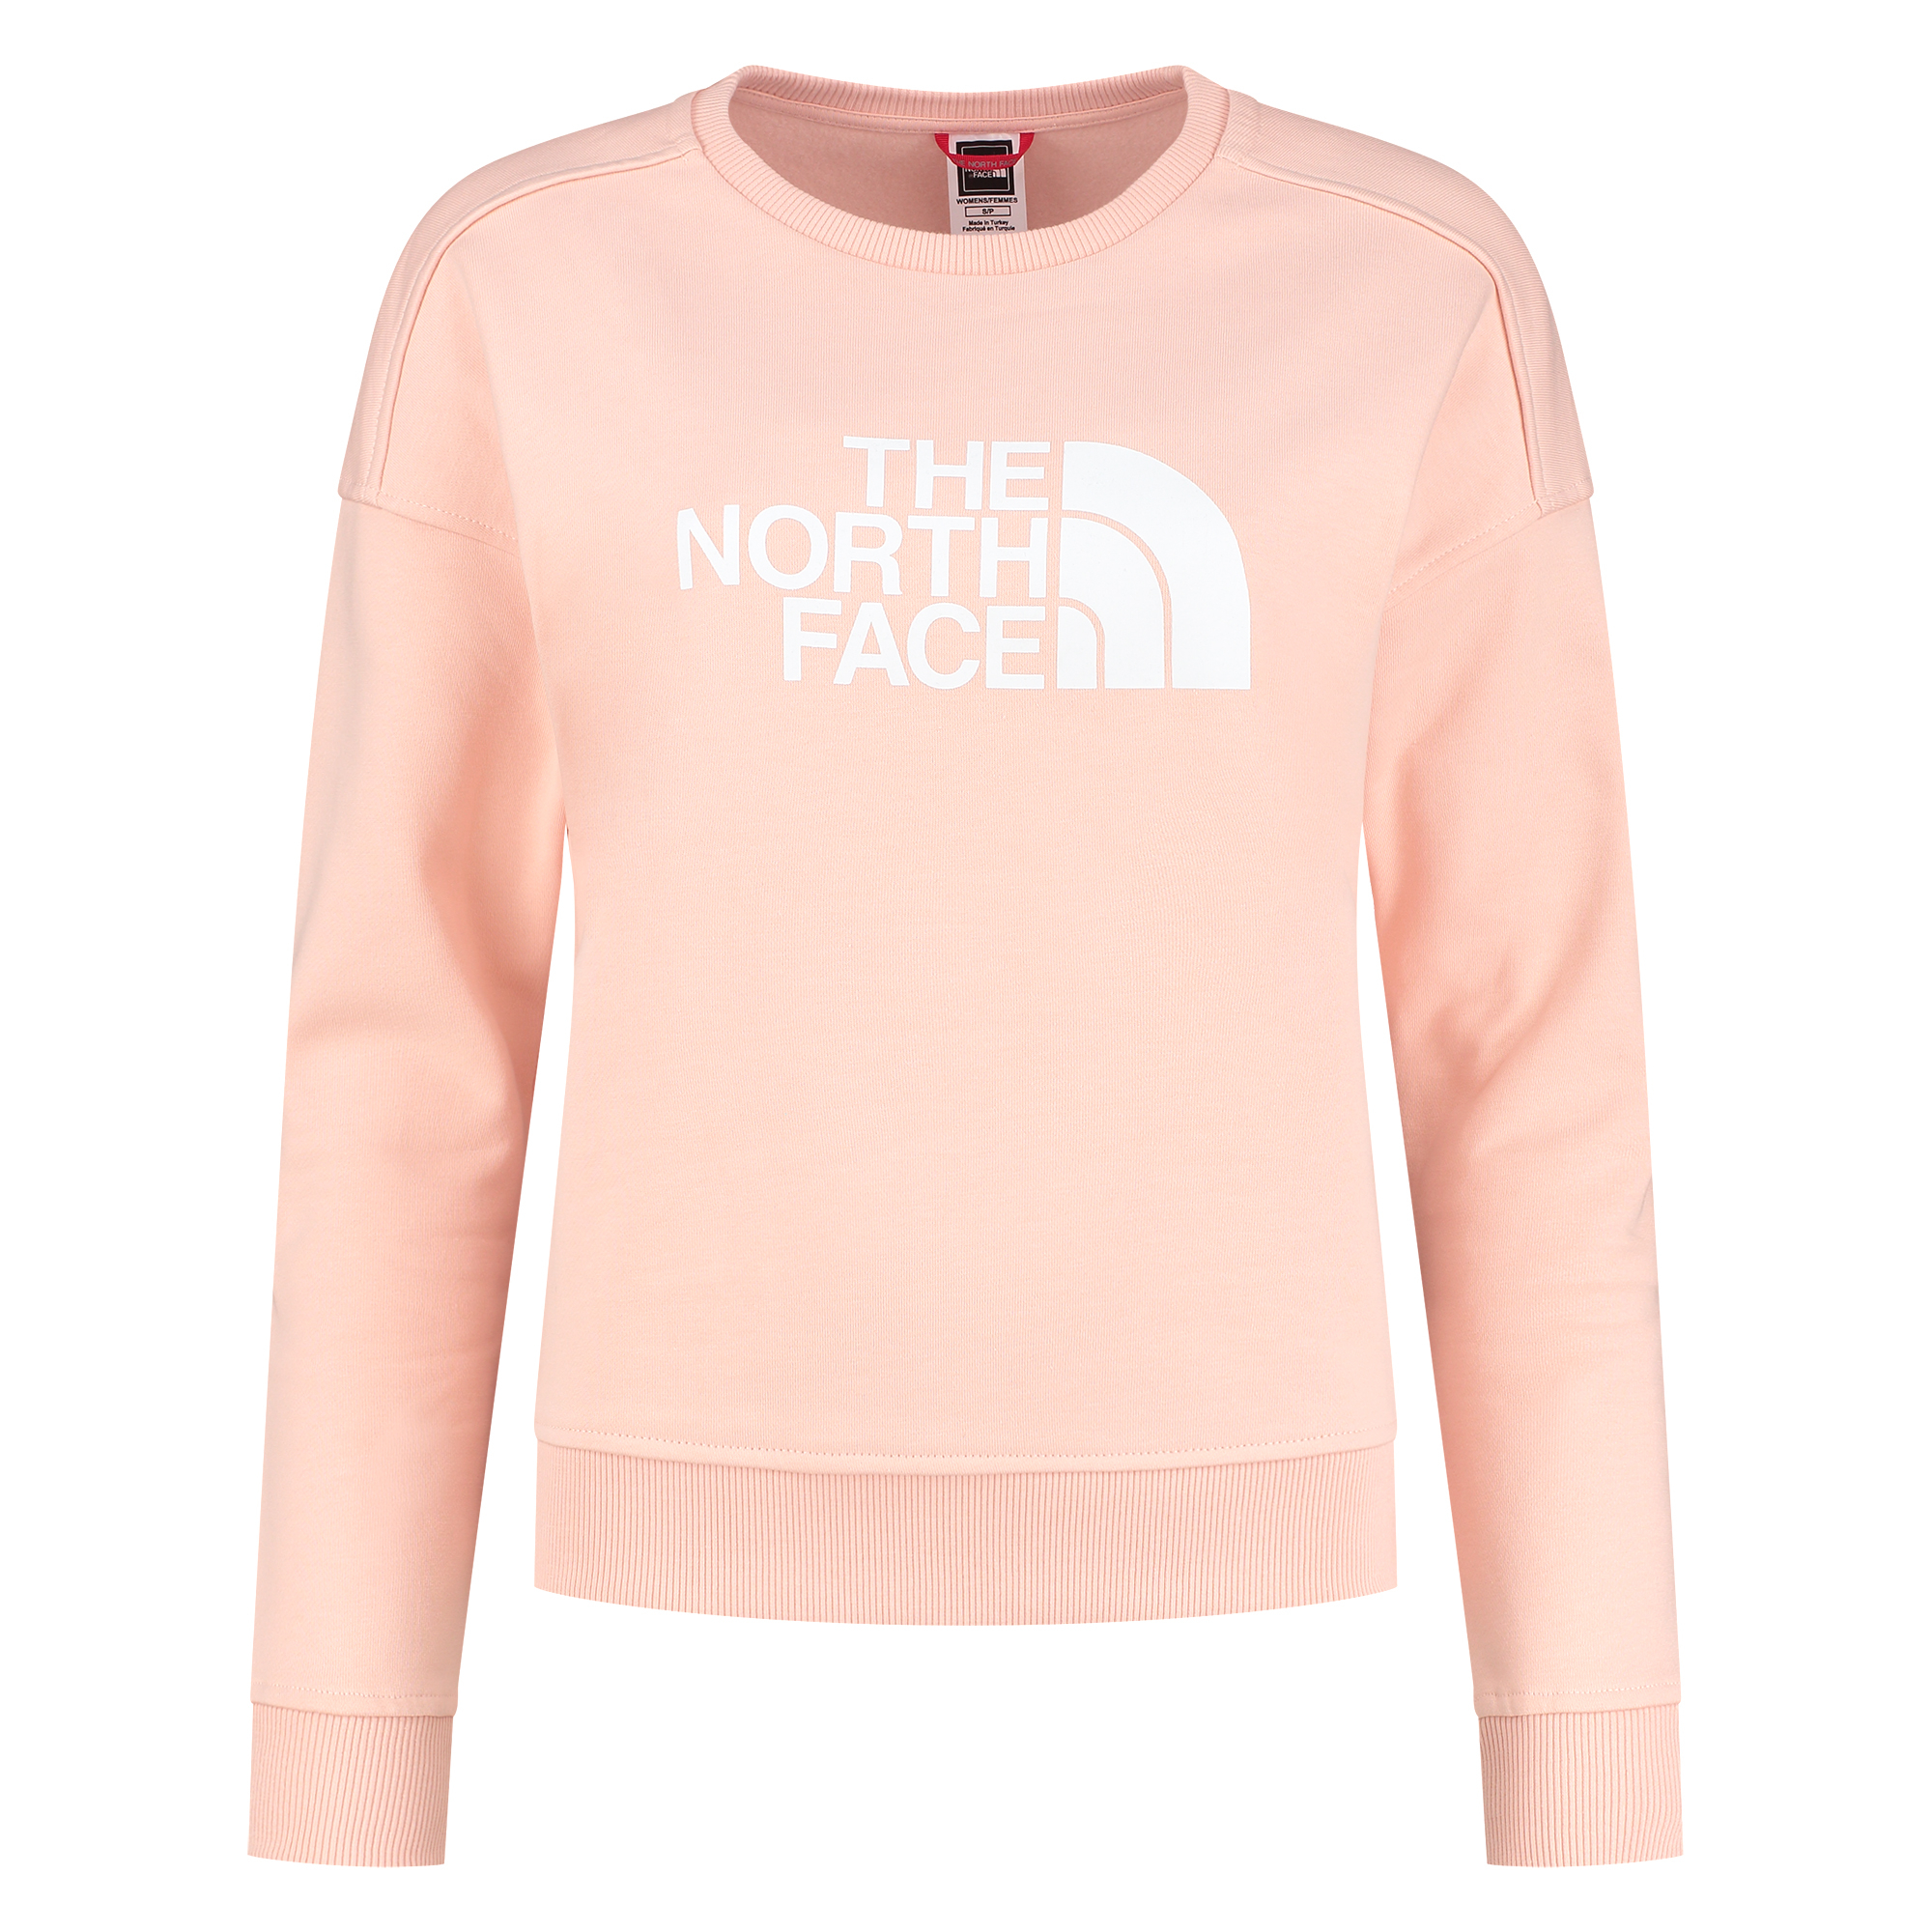 Sweat-shirt The North Face Drew Peak Femme